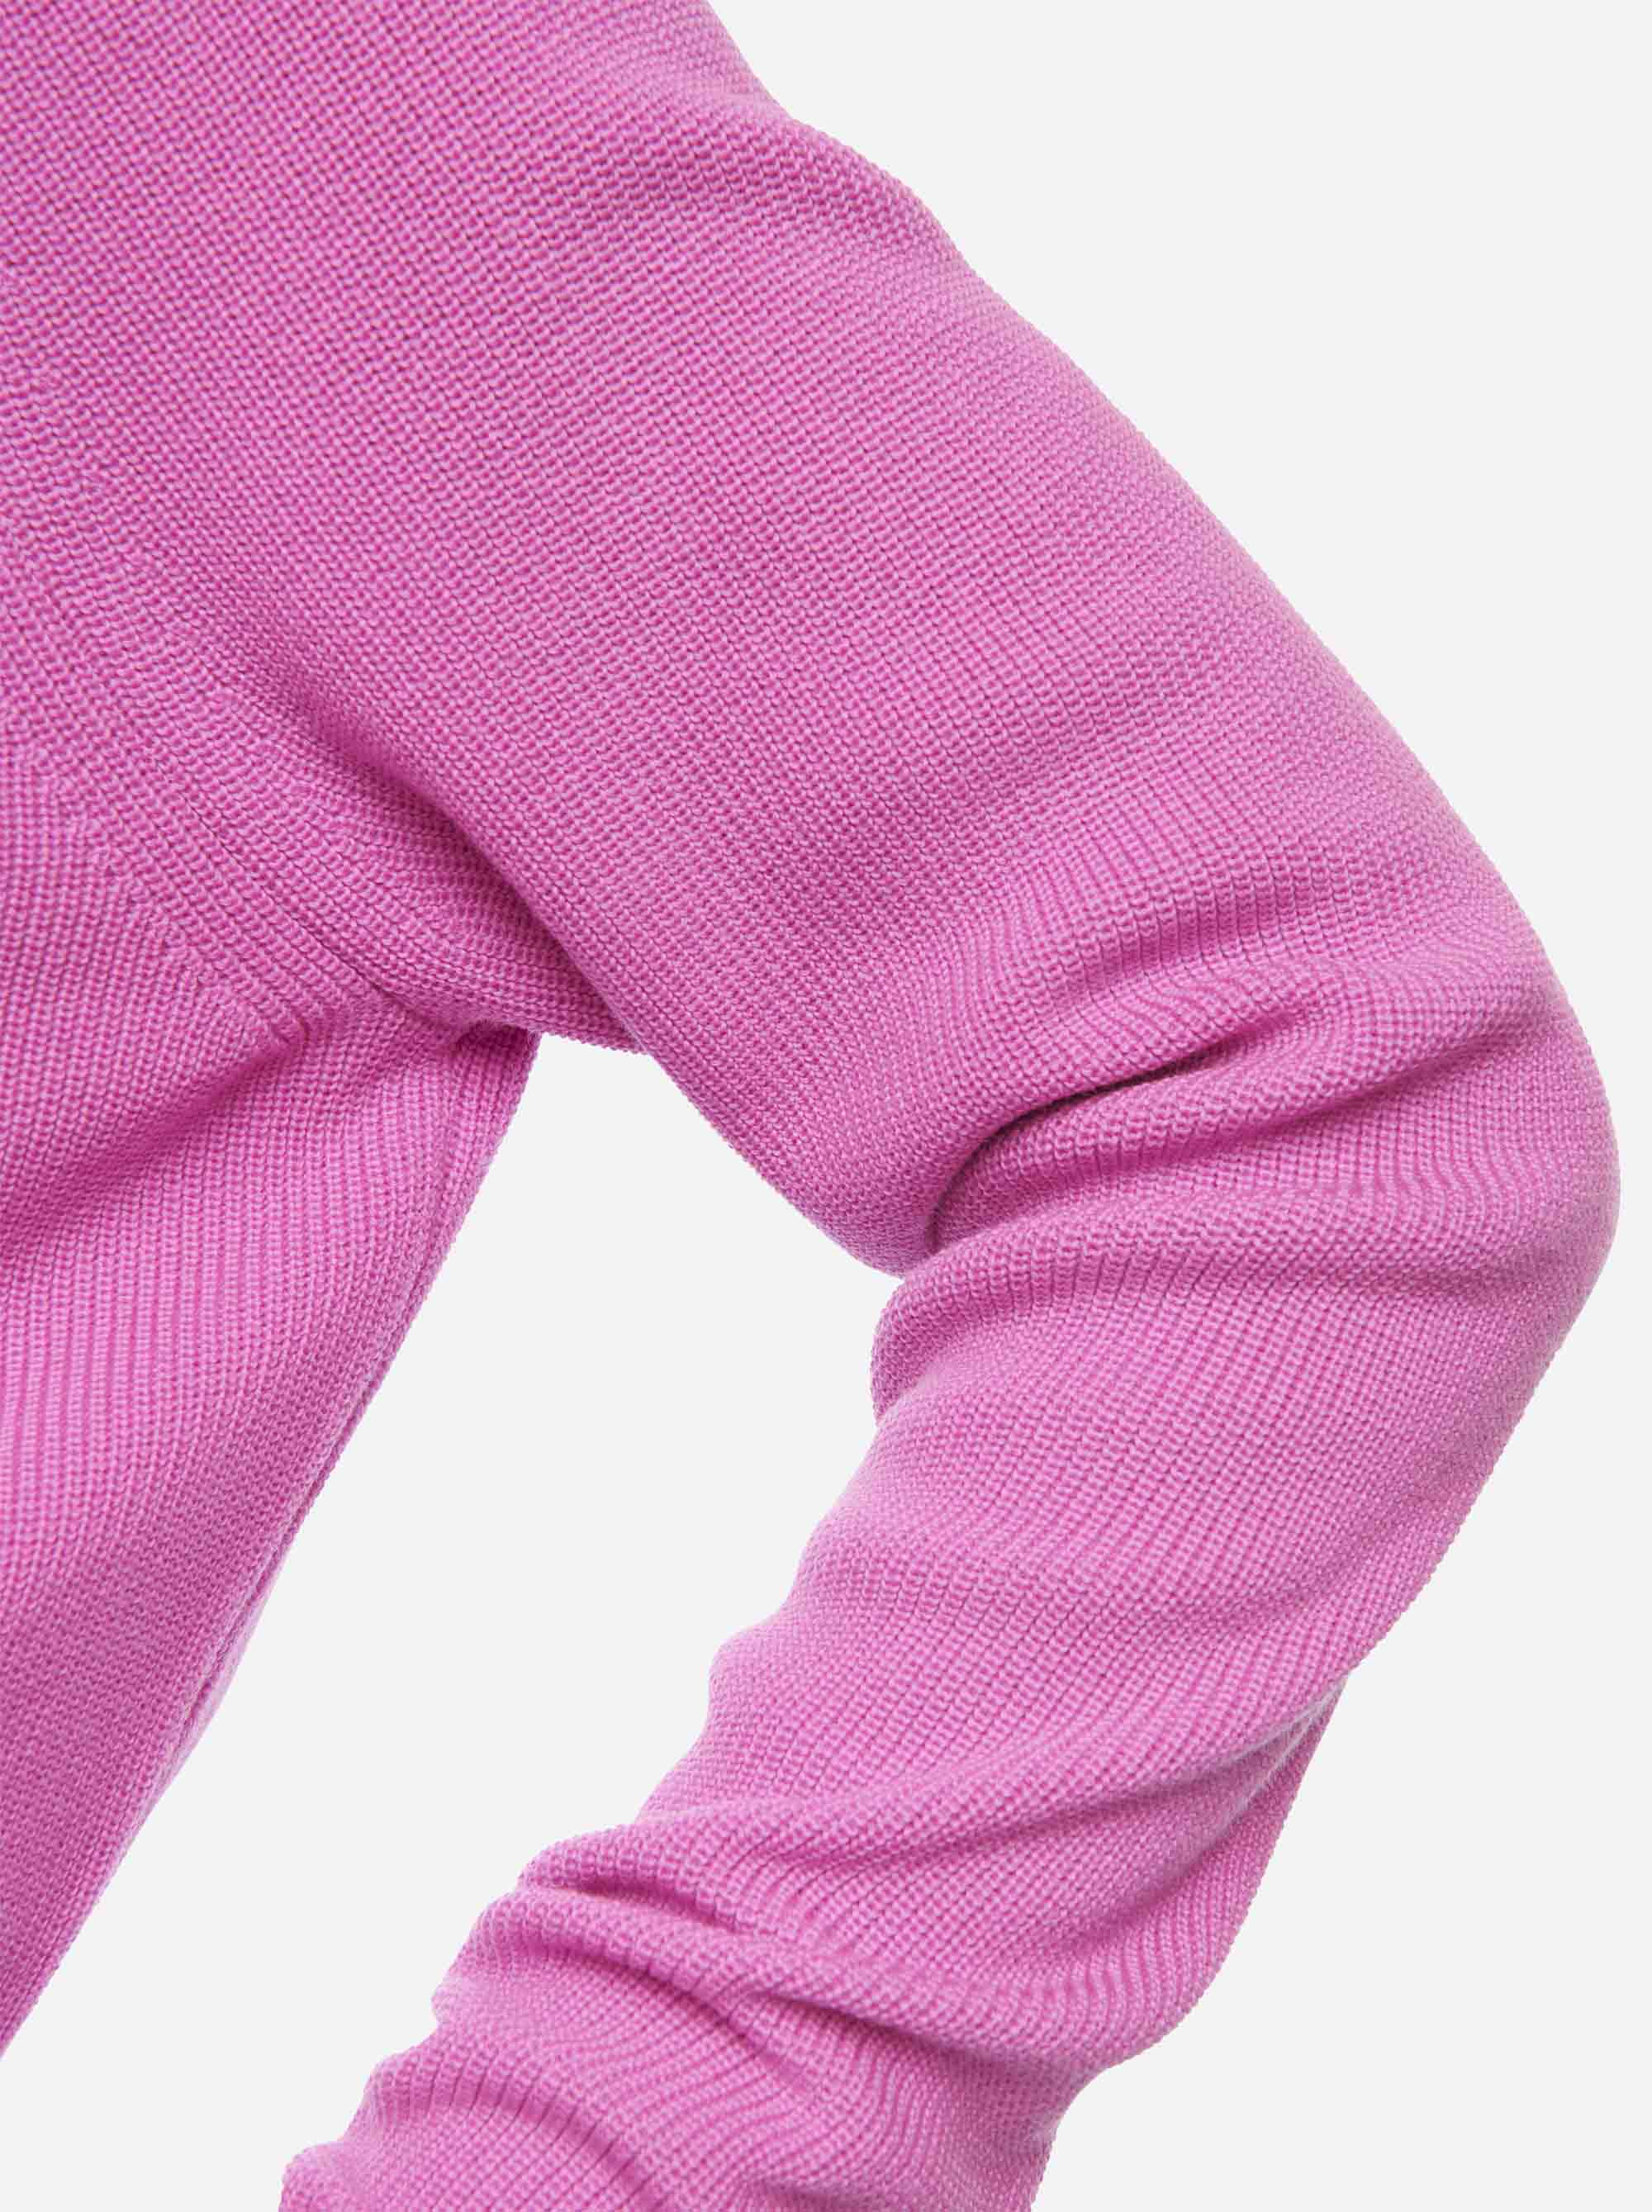 Teym - The Merino Sweater - Crewneck - Women - Bright Pink - 4